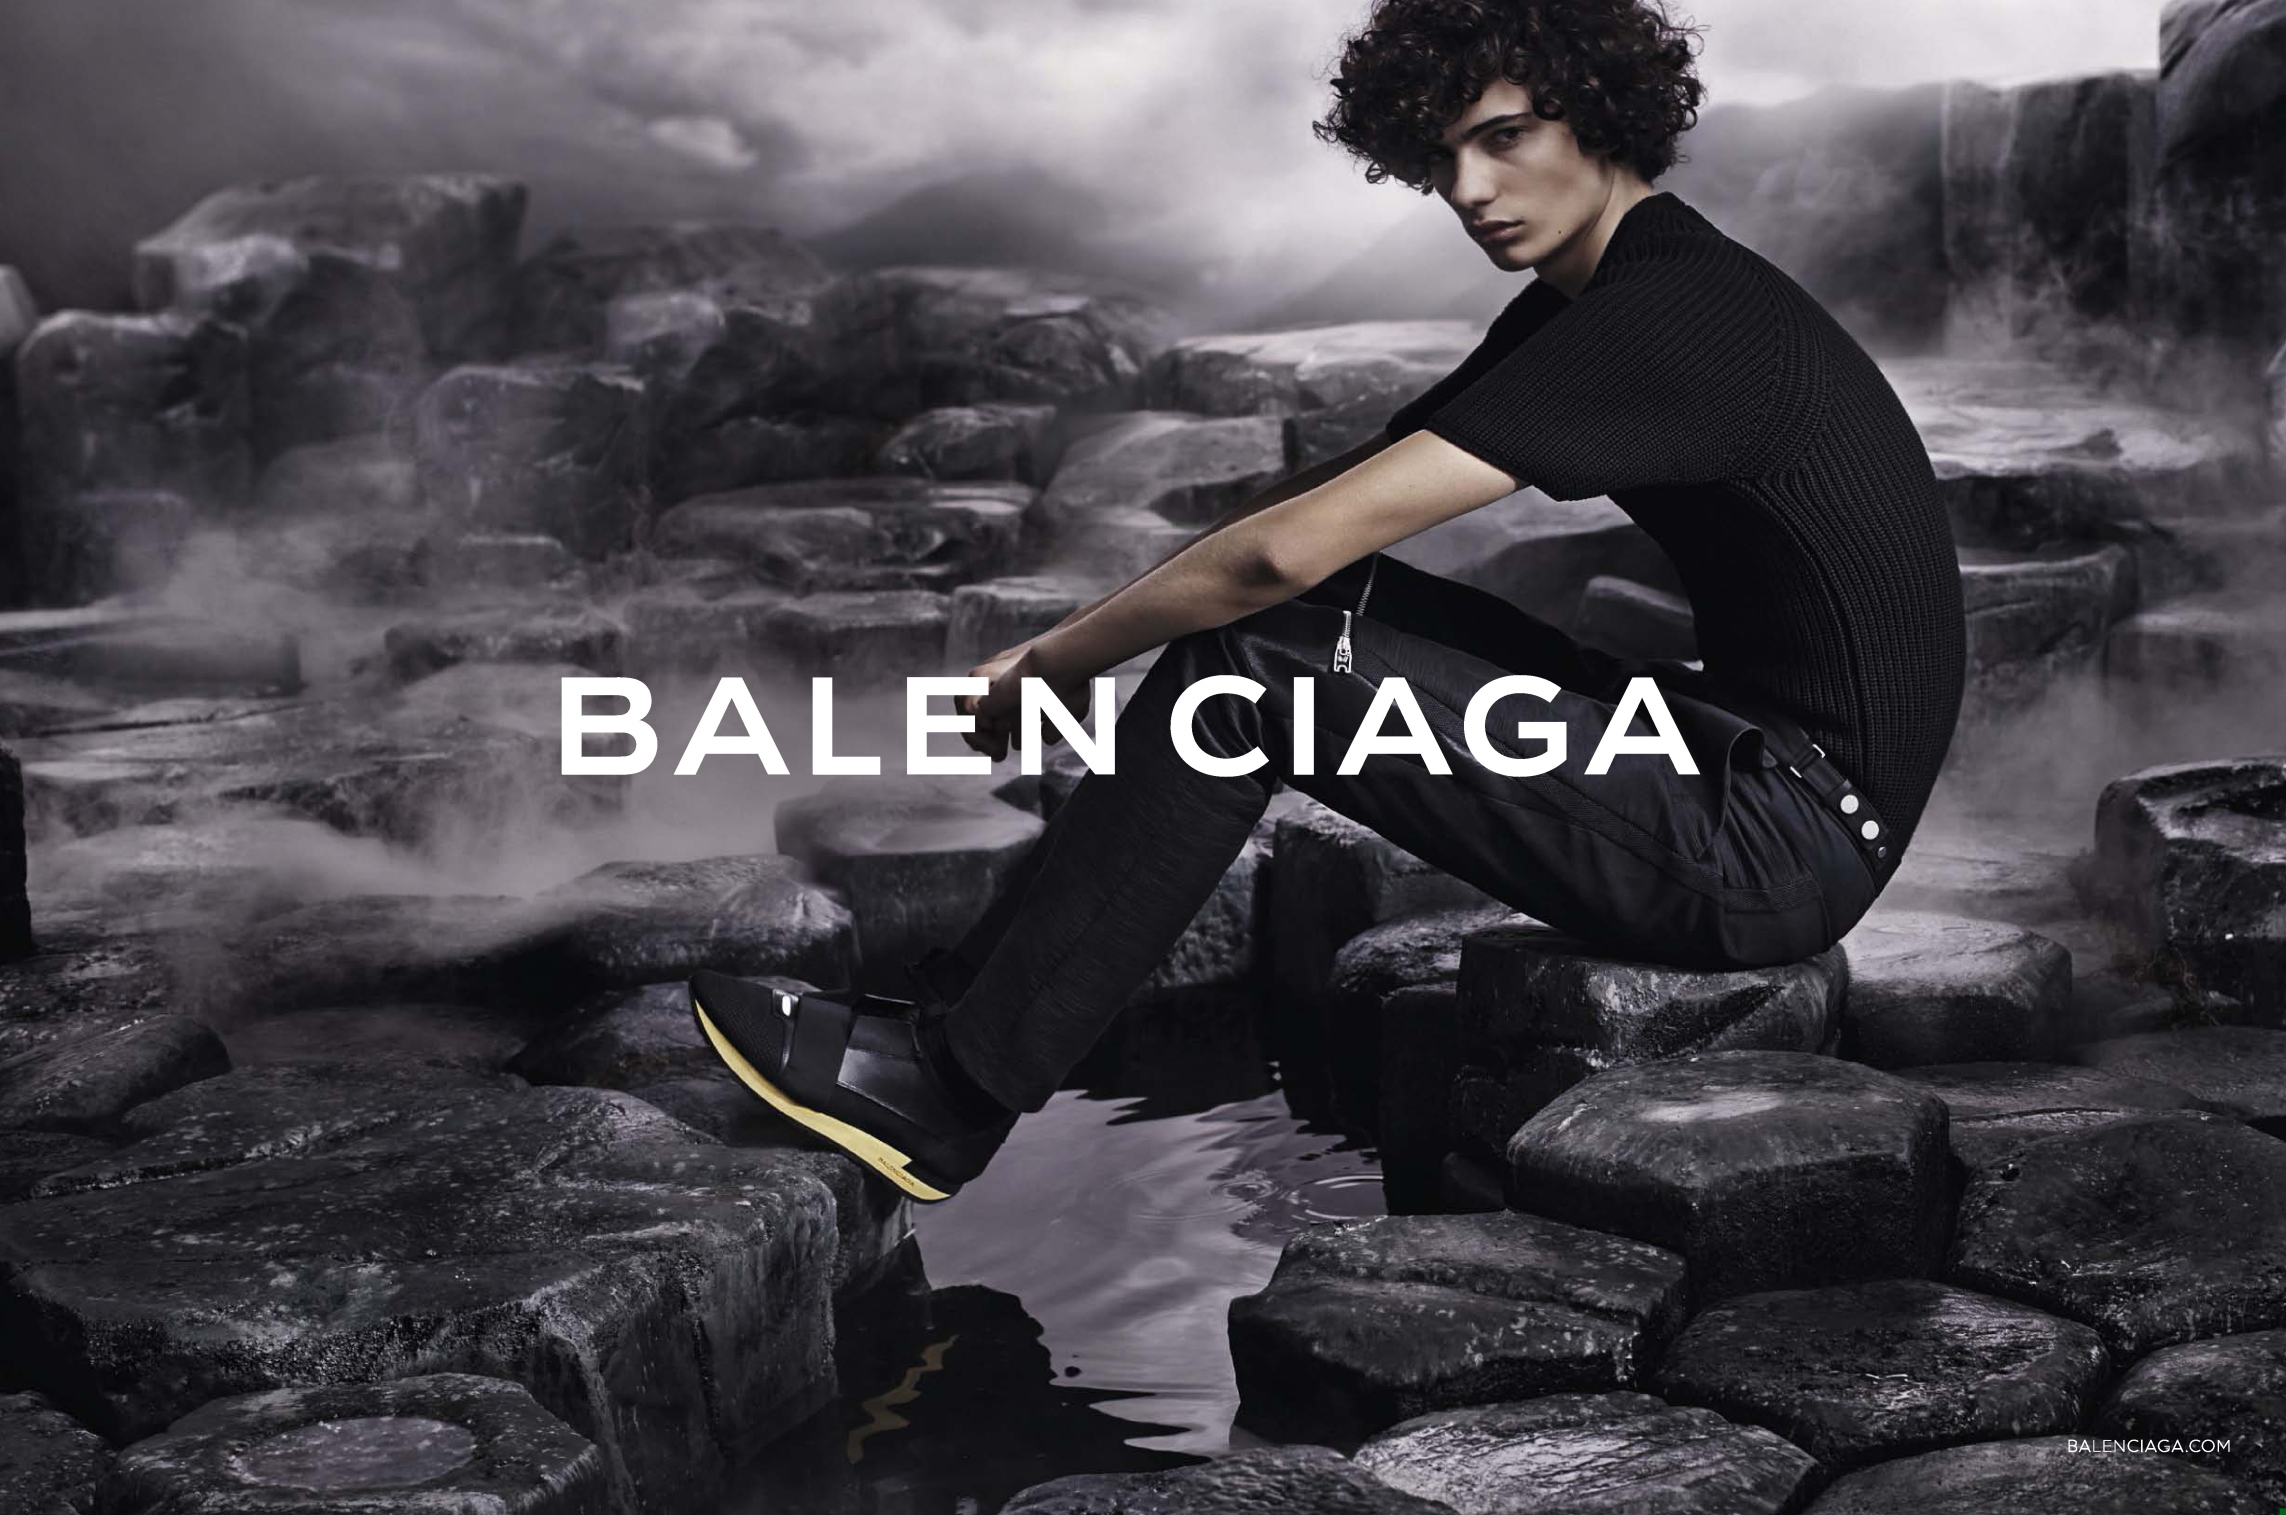 Balenciaga Goes Dark For Spring Summer 2015 Campaign Starring Piero